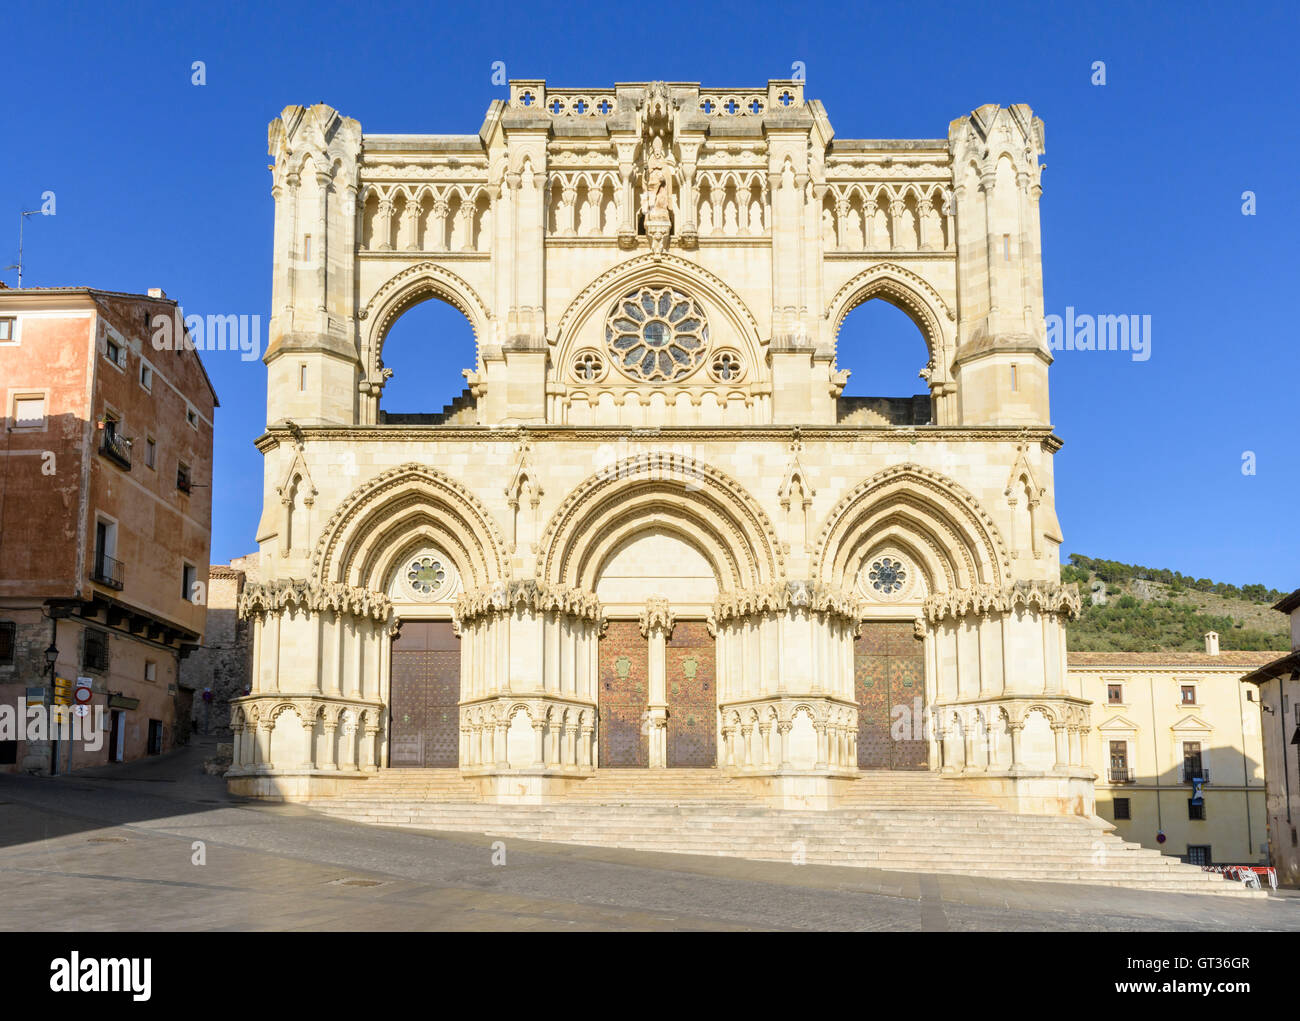 La facciata della Cattedrale di Santa María de Gracia, Plaza Mayor, Cuenca, Castilla La Mancha, in Spagna Foto Stock